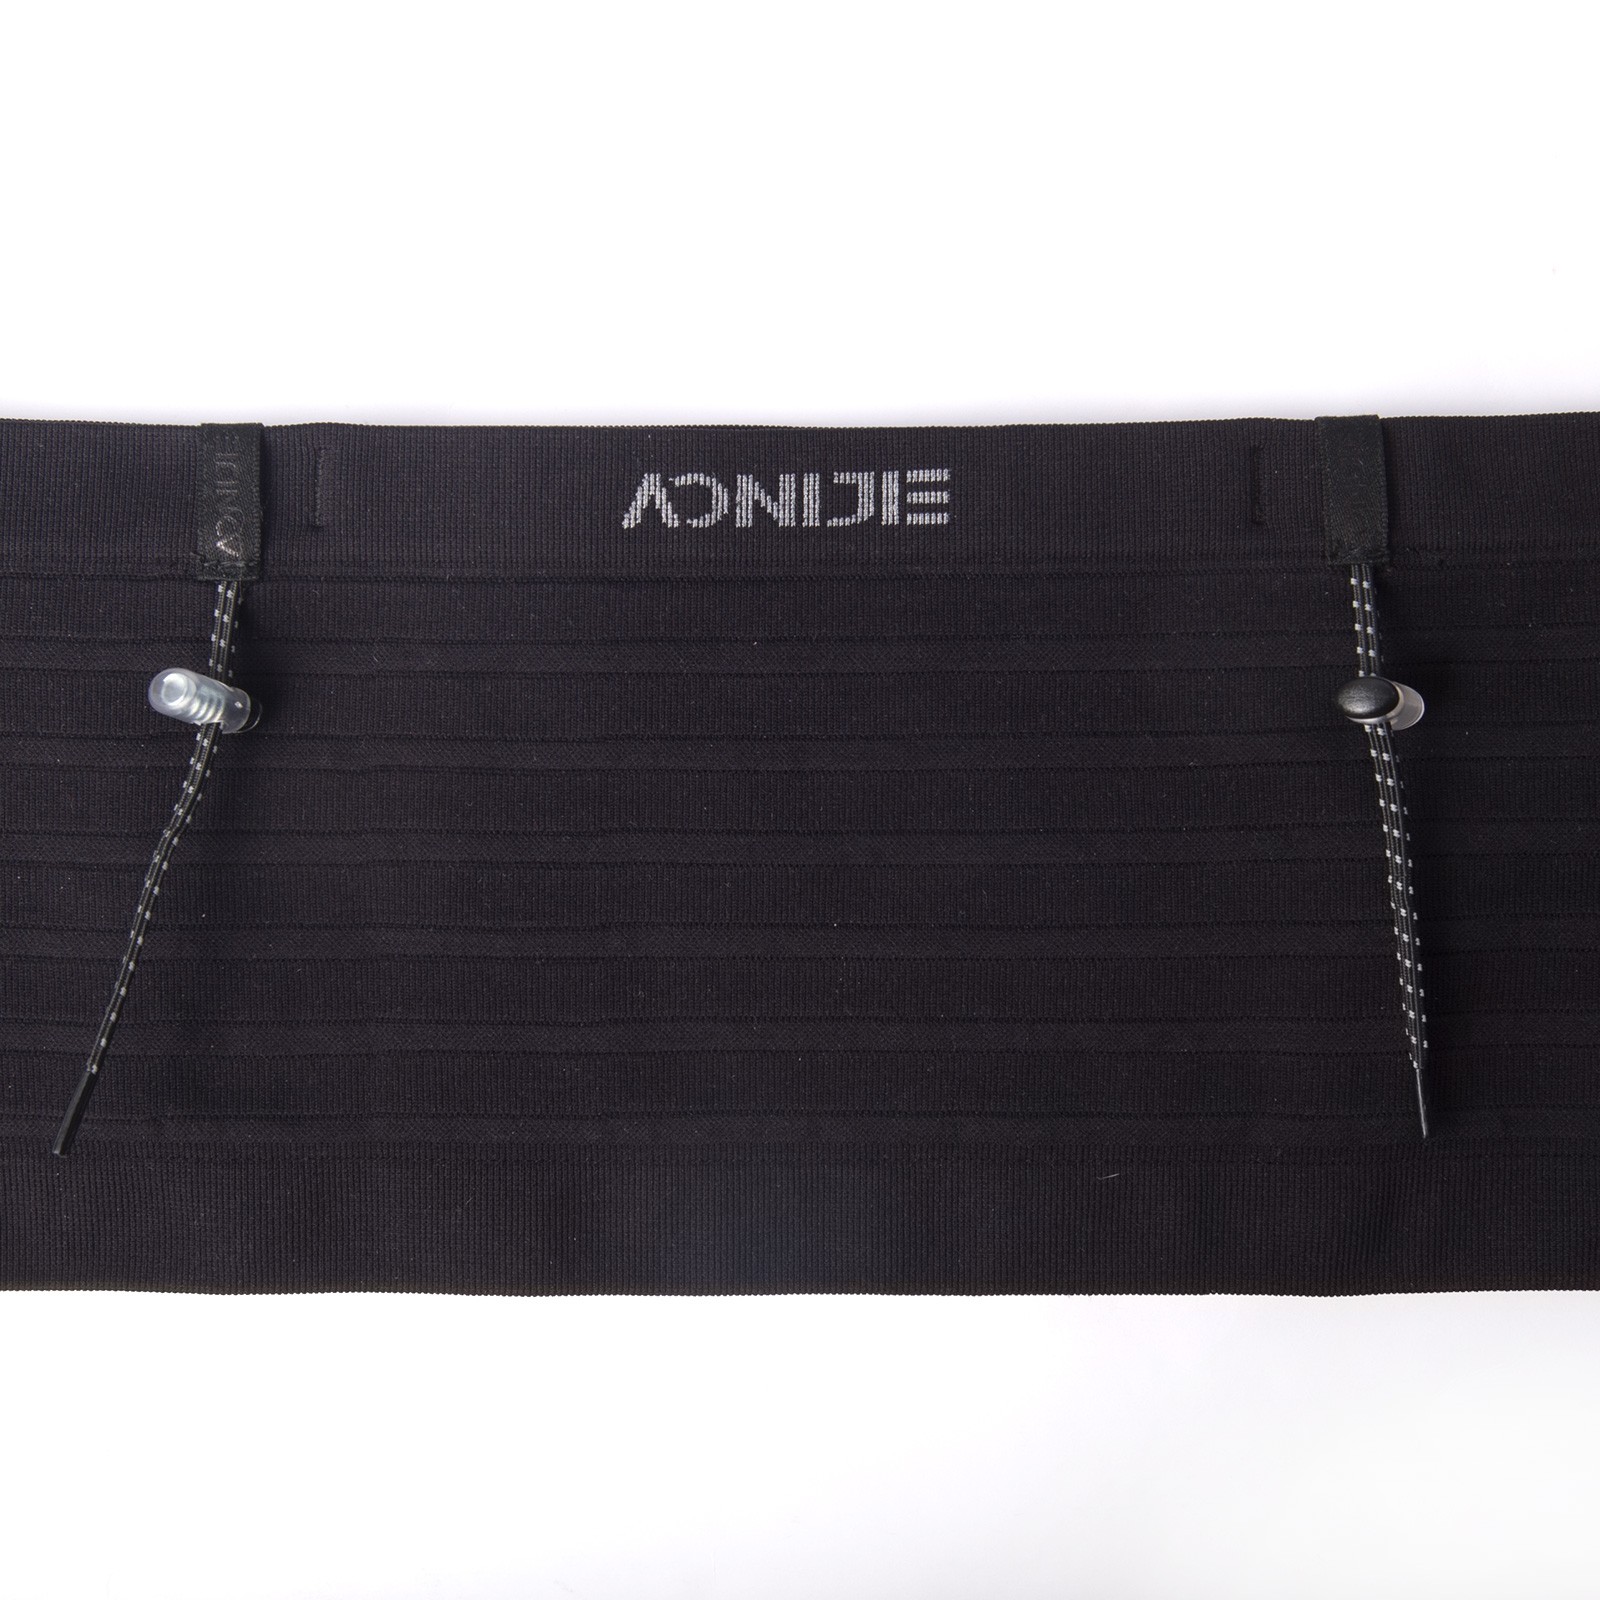 AONIJIE W8116 Sports Waist Bag Black Off-road Running Belt Fanny Pack Ultralight Outdoor Unisex Phone Holder Waist Pack Custom